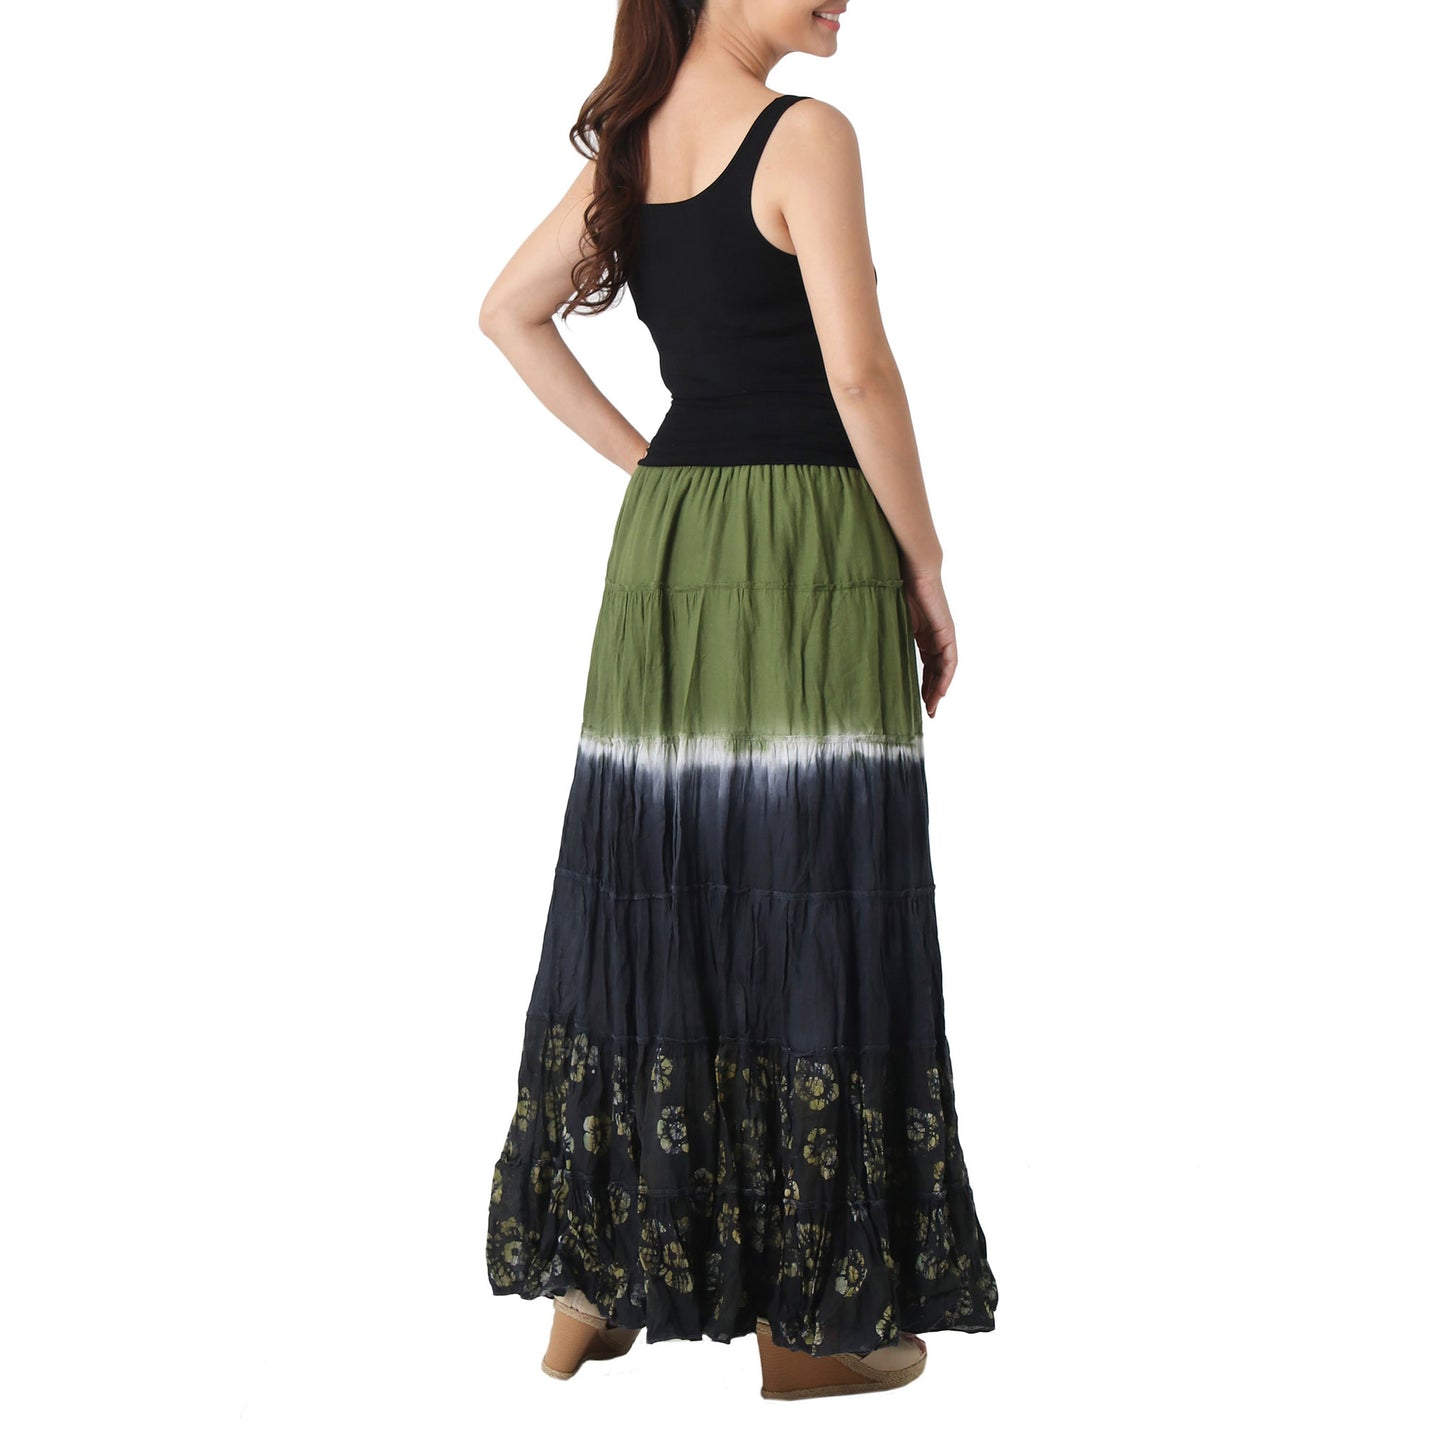 Festive Summer in Olive Black & Green Batik Cotton Skirt